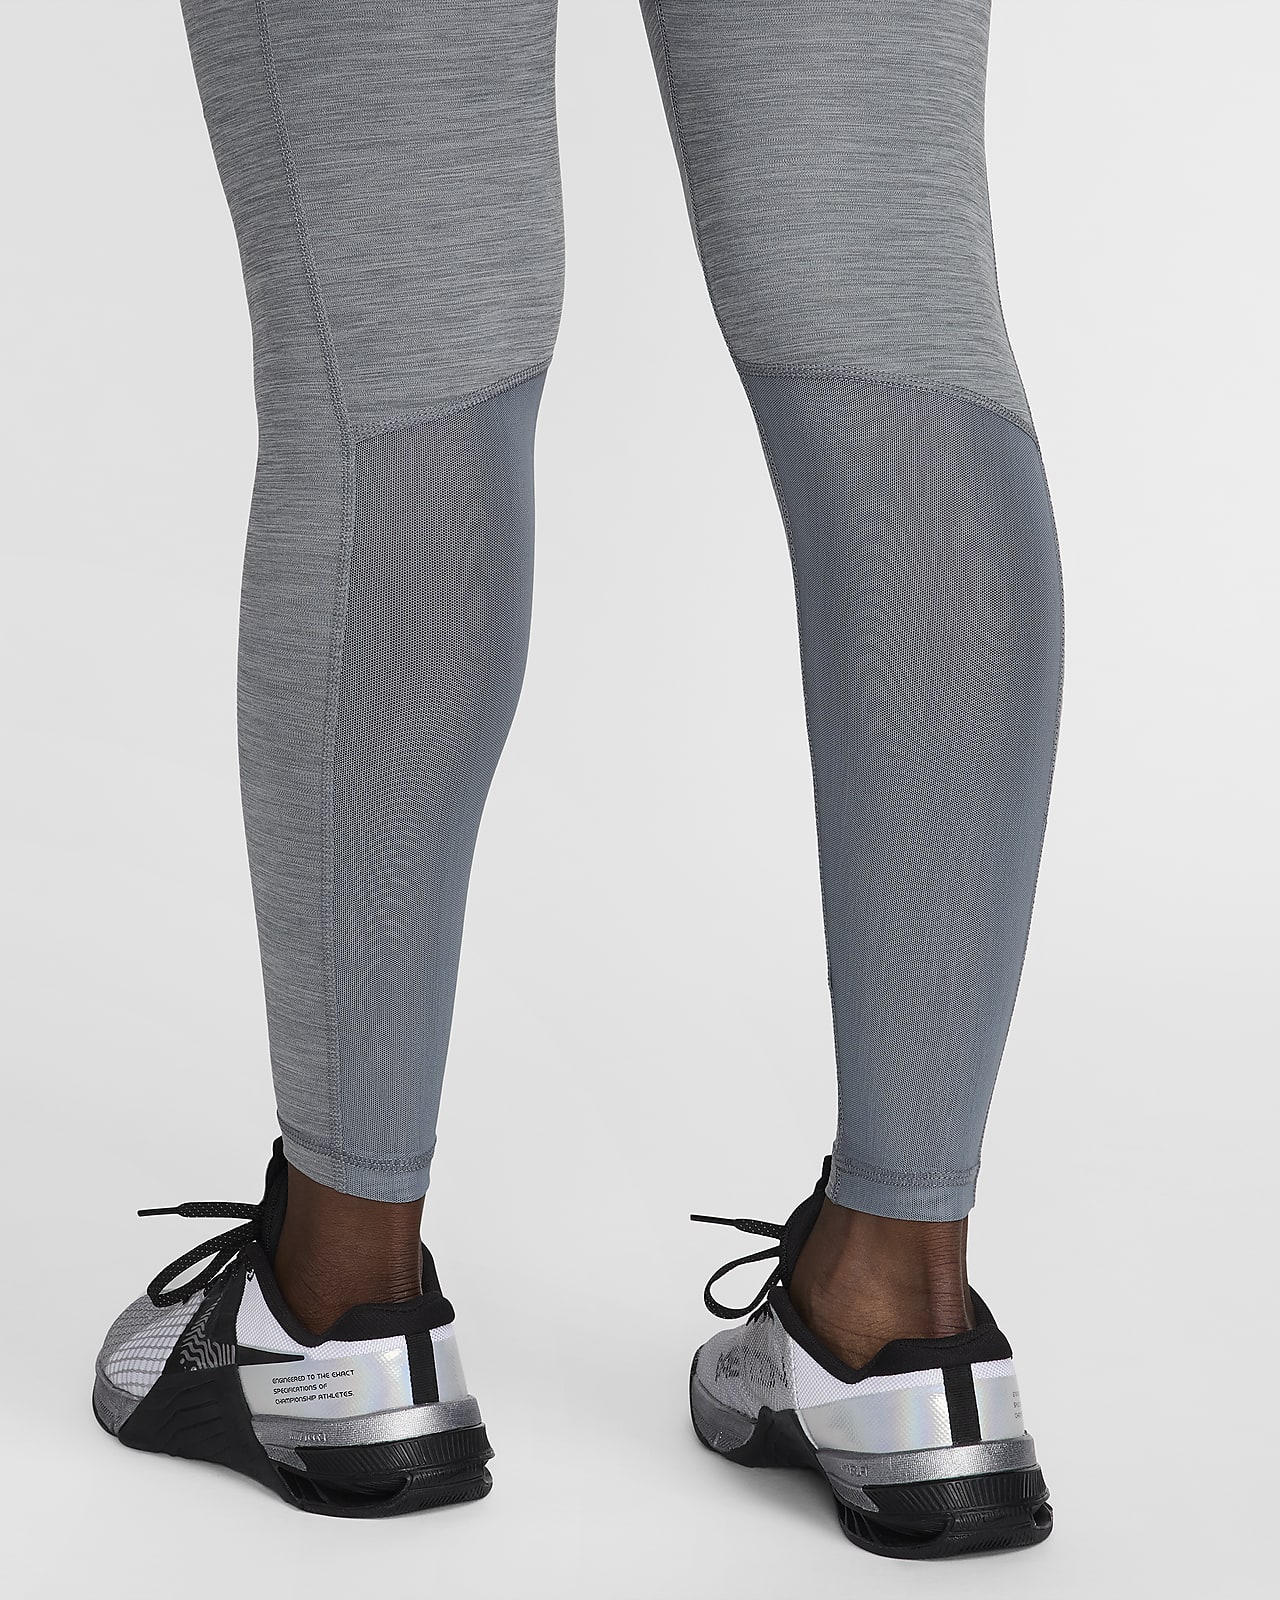 Nike Pro Dri-fit S Graphic Mid-rise Leggings dq5595-222 XL Verde